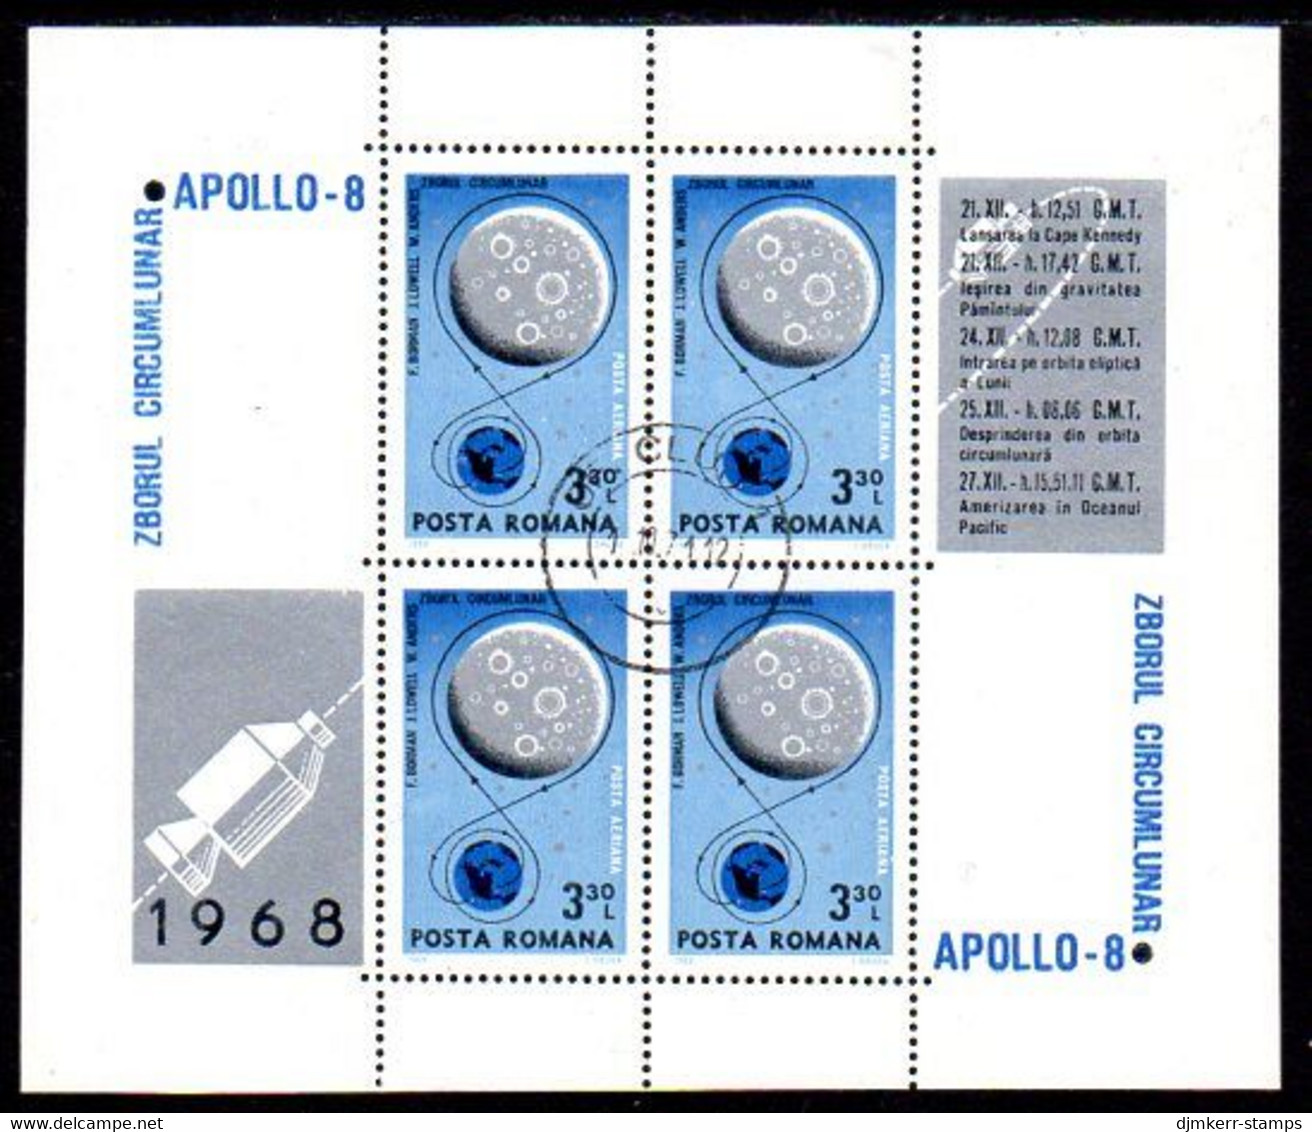 ROMANIA 1969 Apollo 8 Moon Landing  Block  Used.  Michel Block 69 - Oblitérés